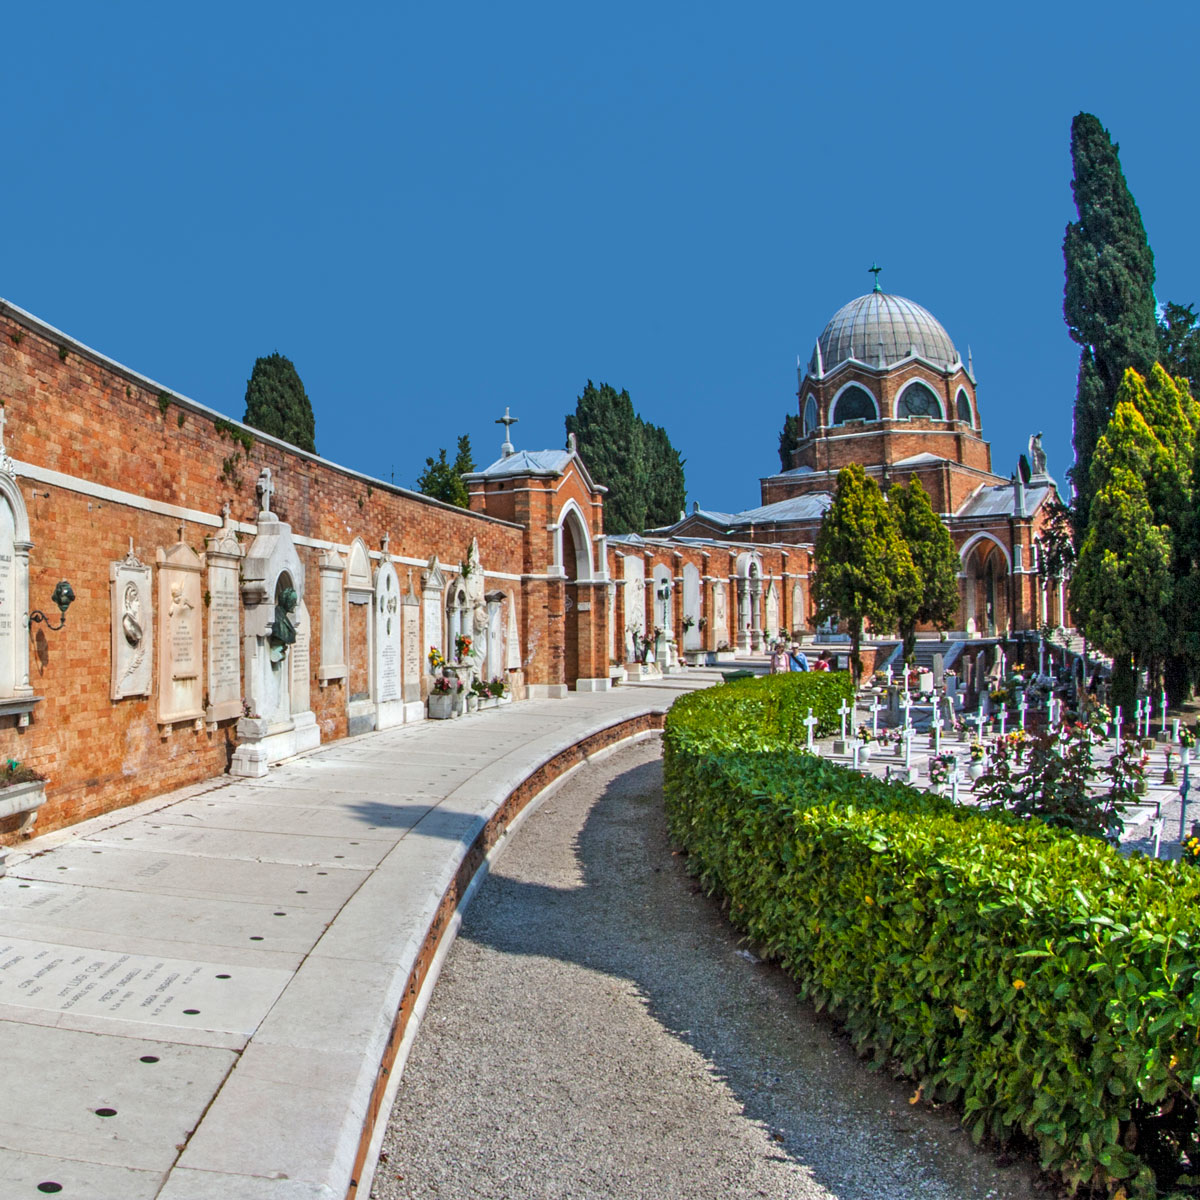 Cimitero San Michele